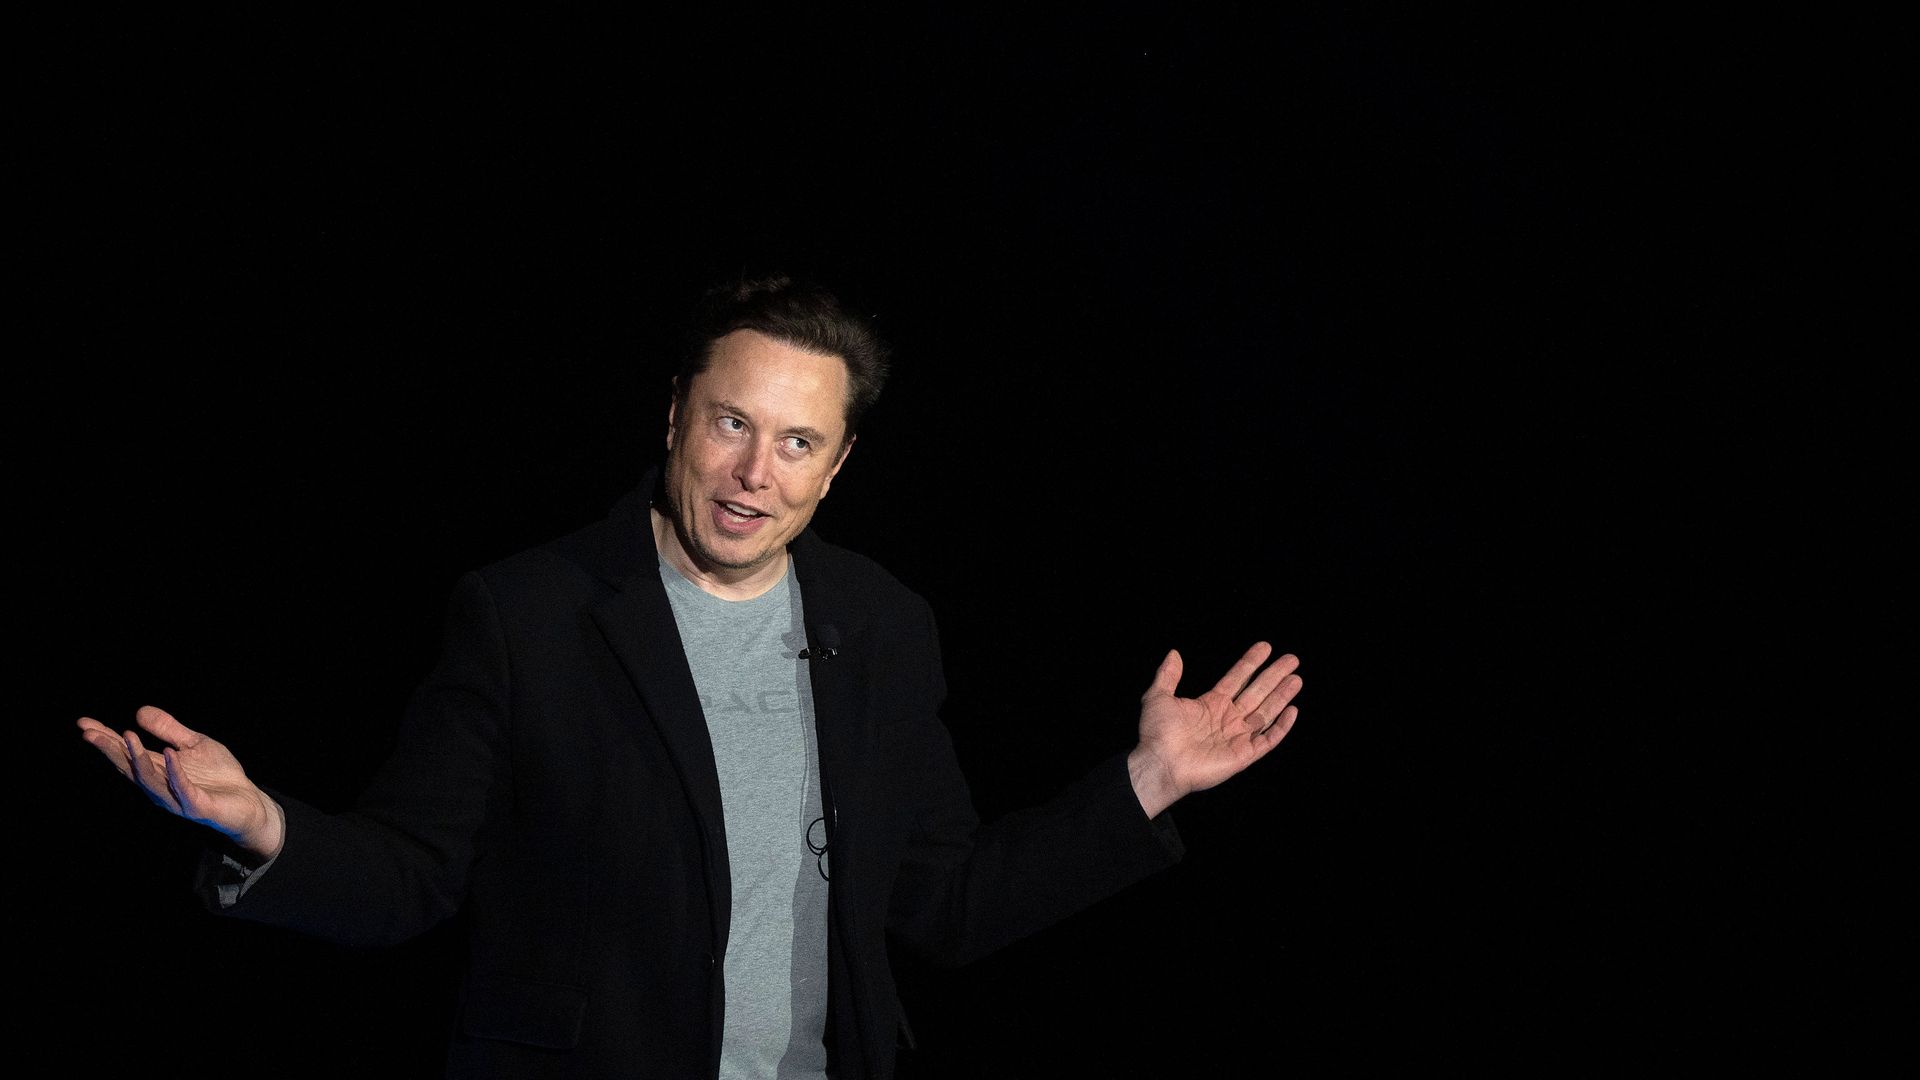 Elon Musk seemingly doing a goblin impression